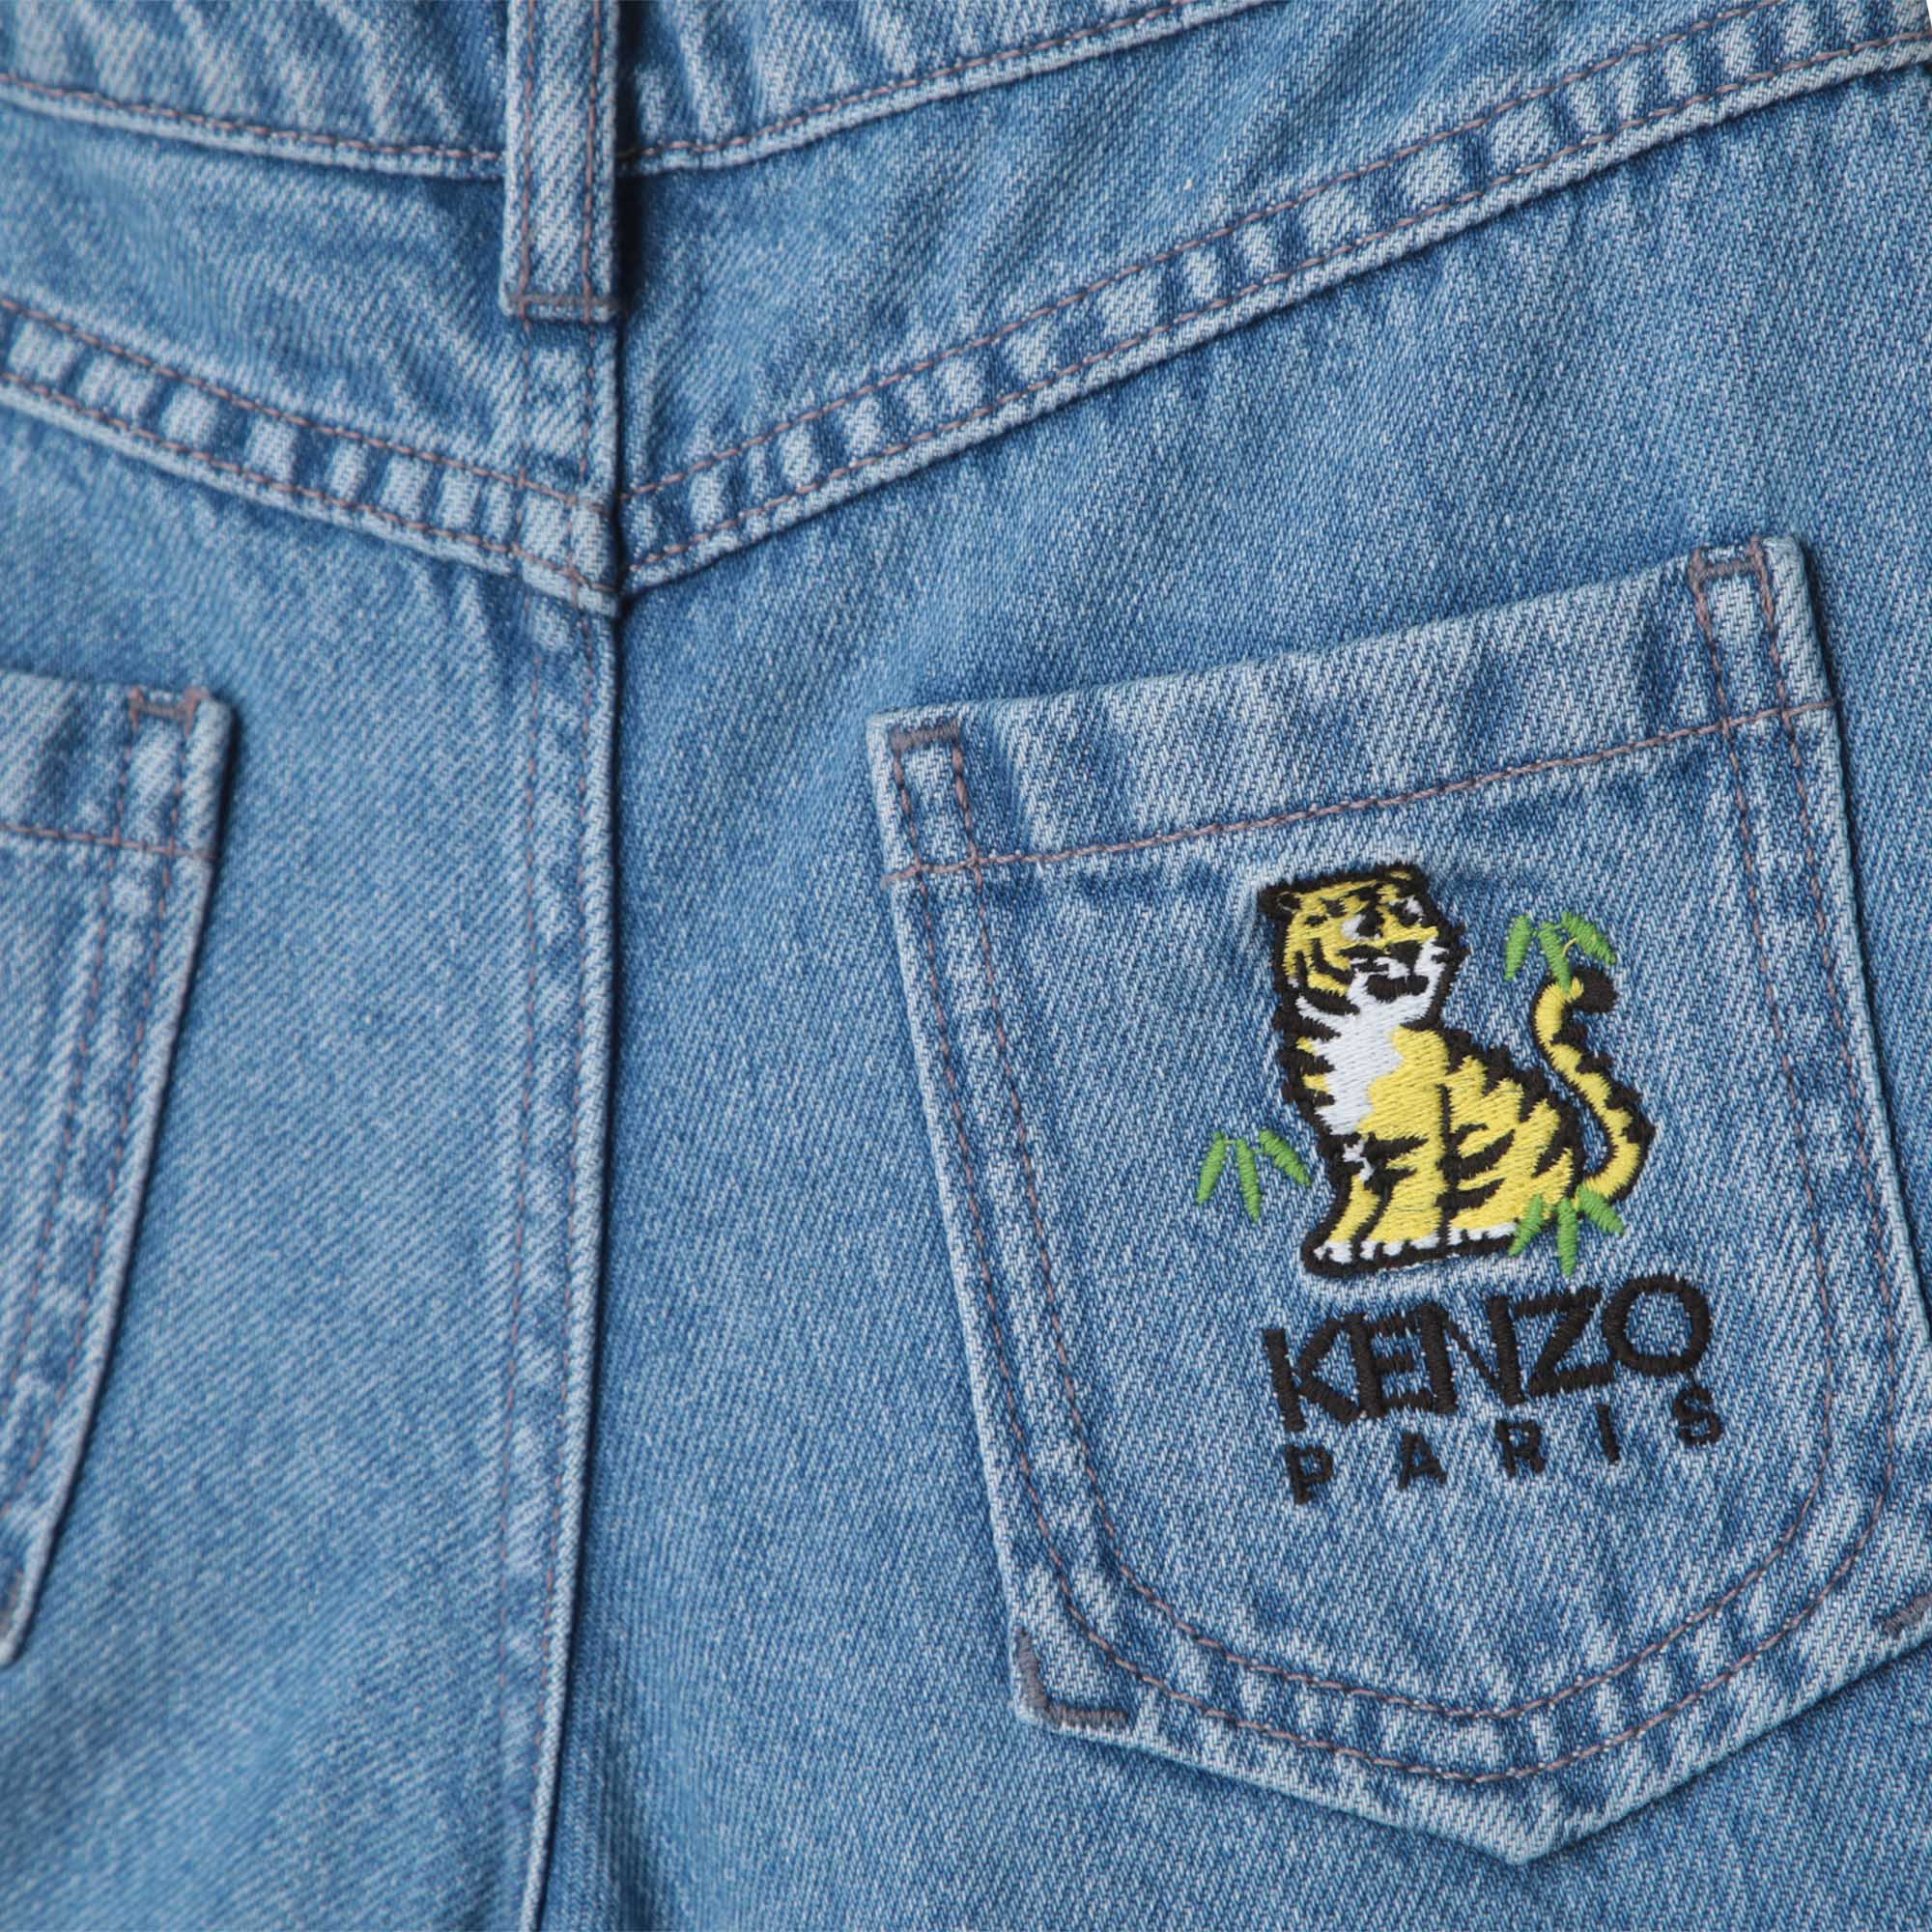 Shorts in jeans tasca ricamata KENZO KIDS Per BAMBINA